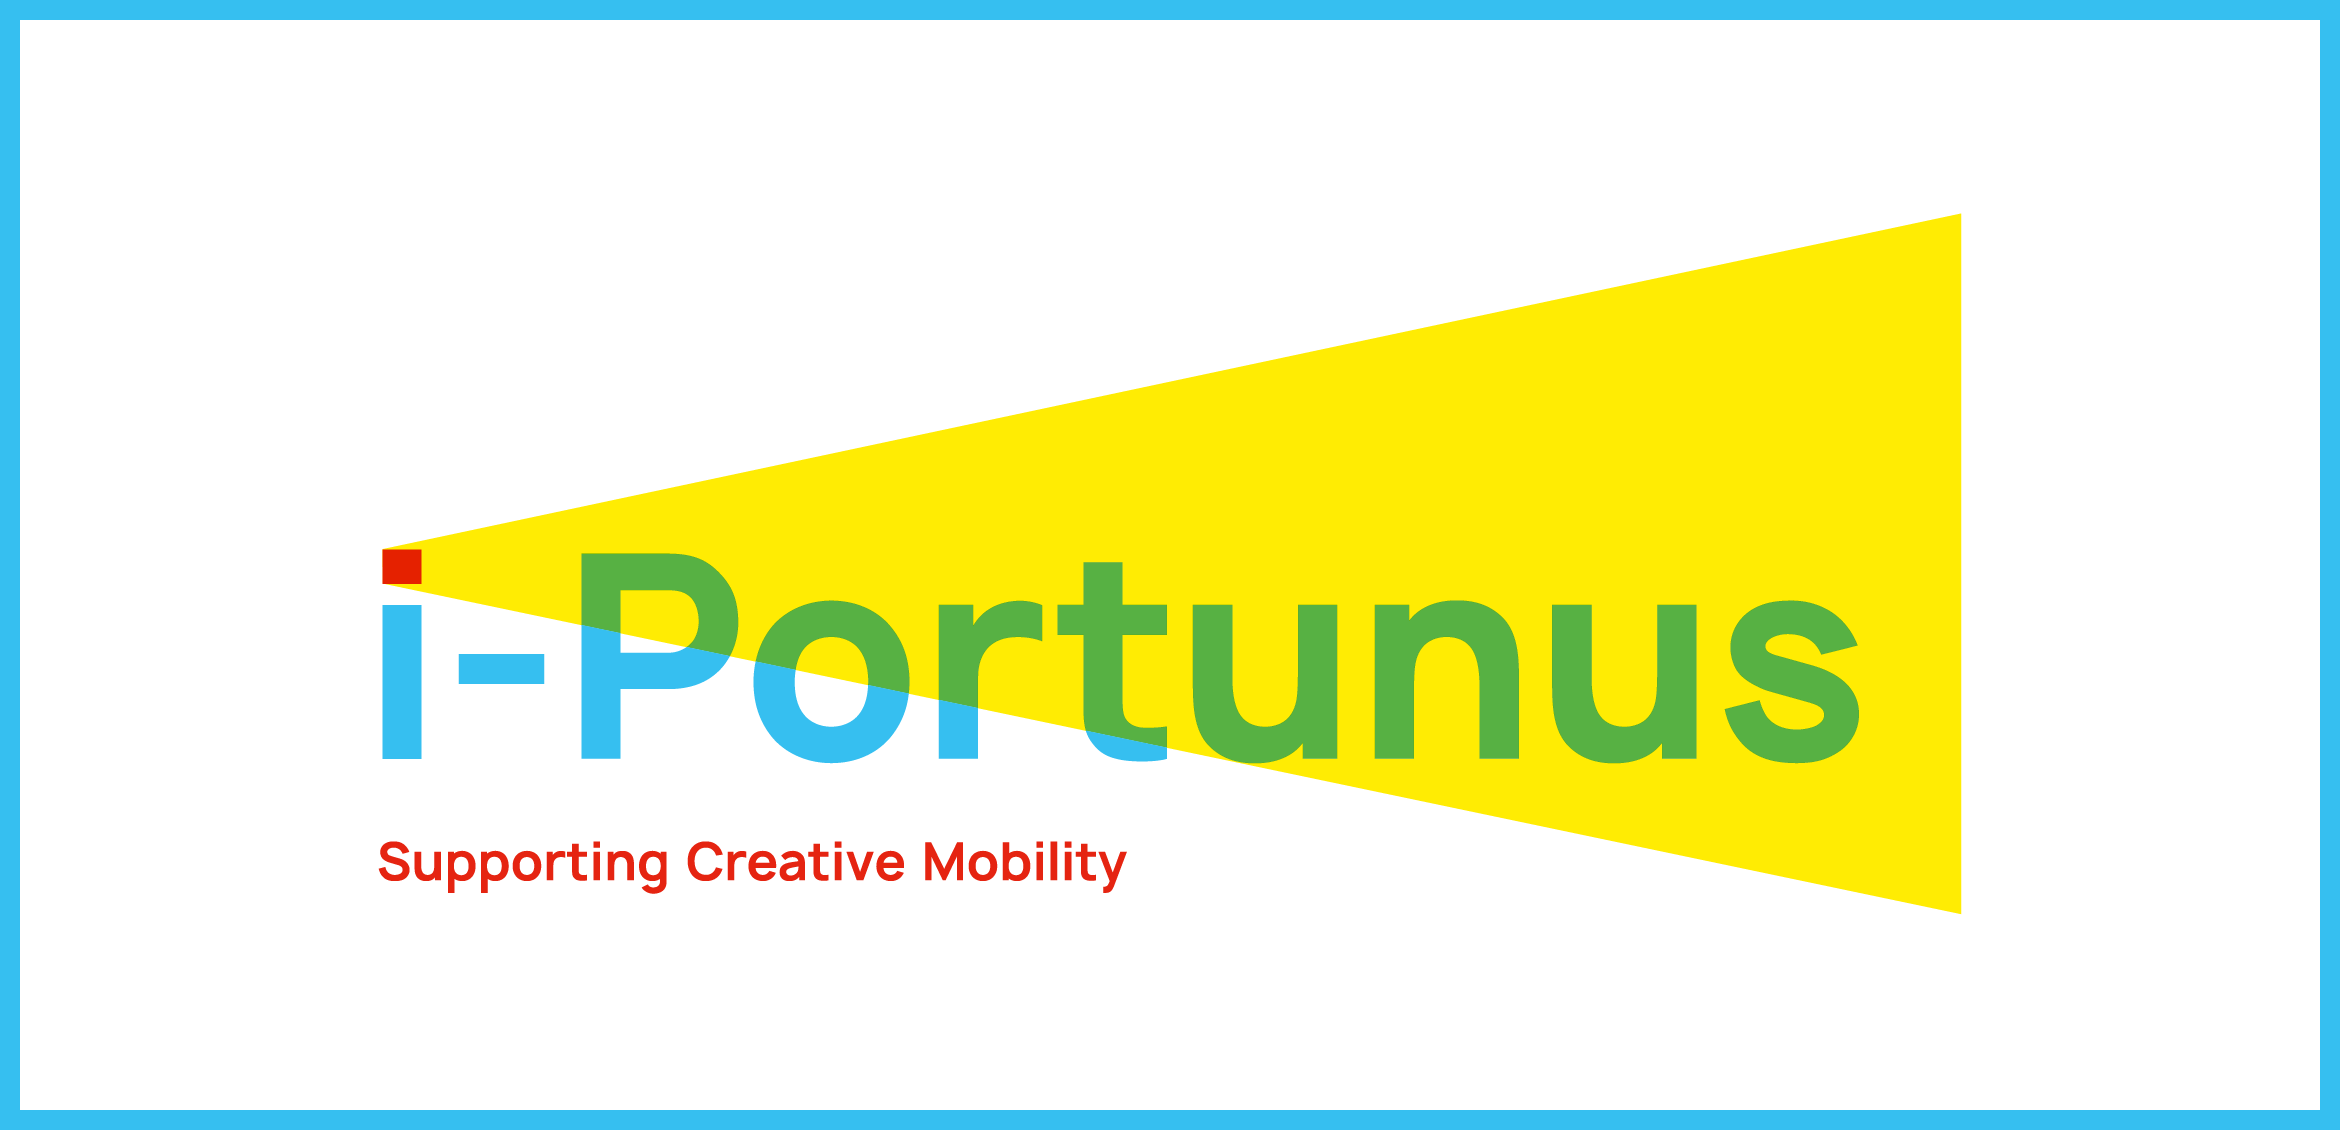 i-Portunus 2020-21. EU mobility scheme for artists and cultural professionals.